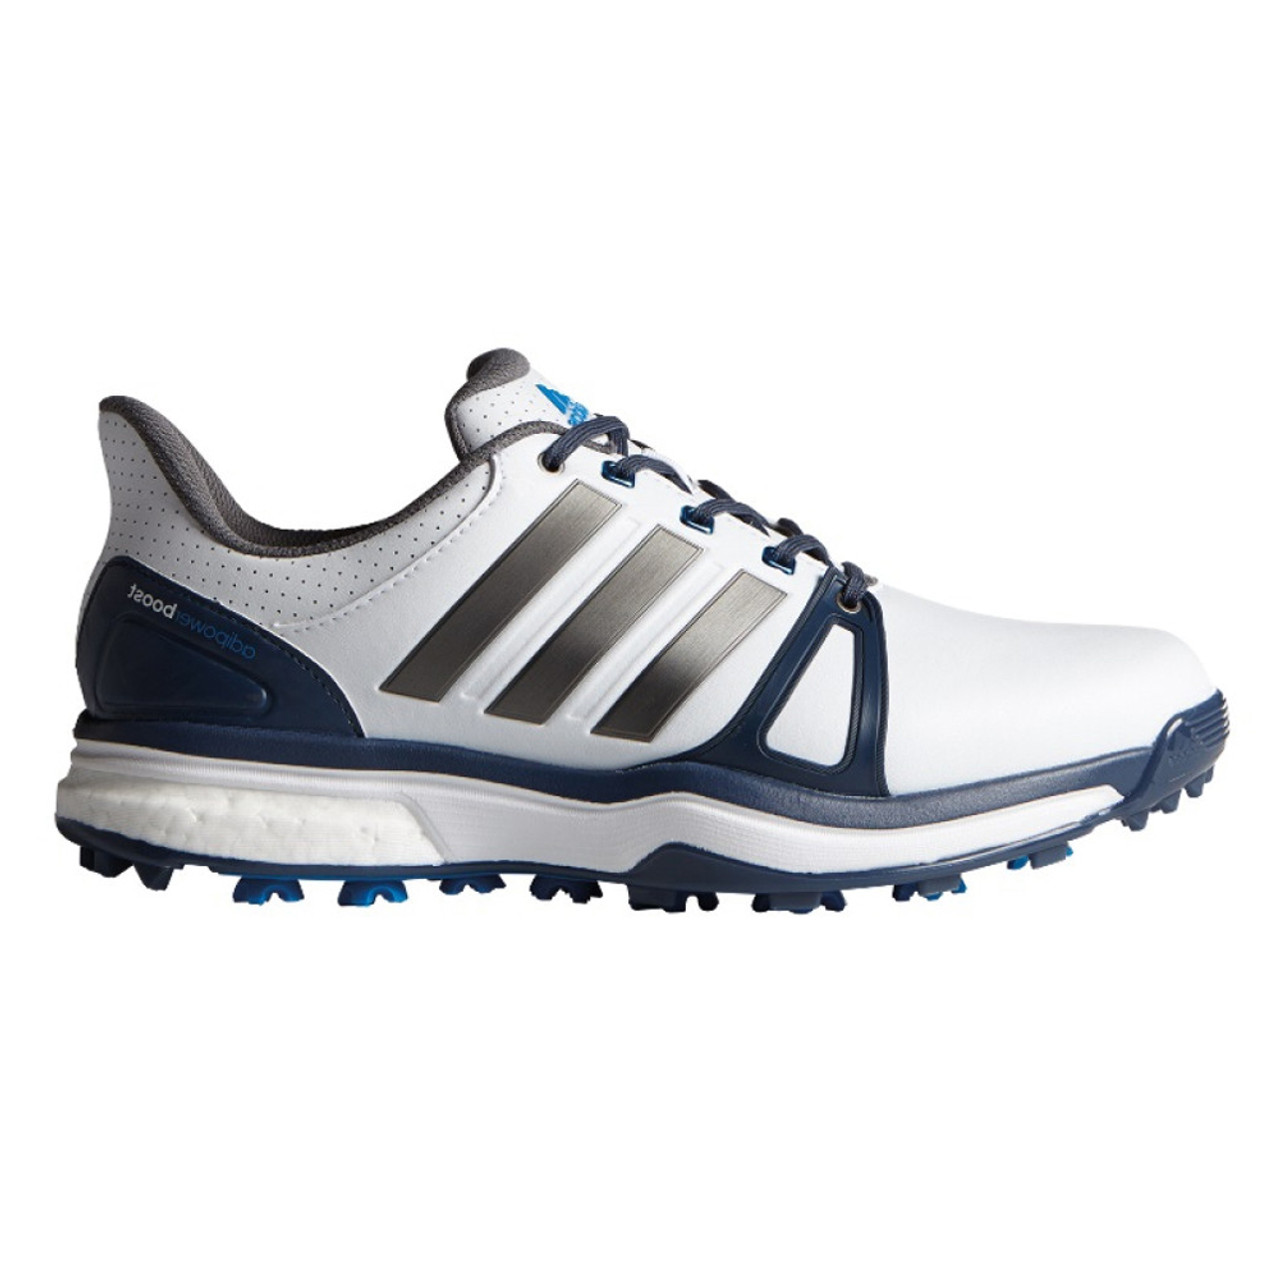 Adidas Men's Adipower Golf Cleat - White | Discount Adidas Men's Athletic & More - Shoolu.com | Shoolu.com